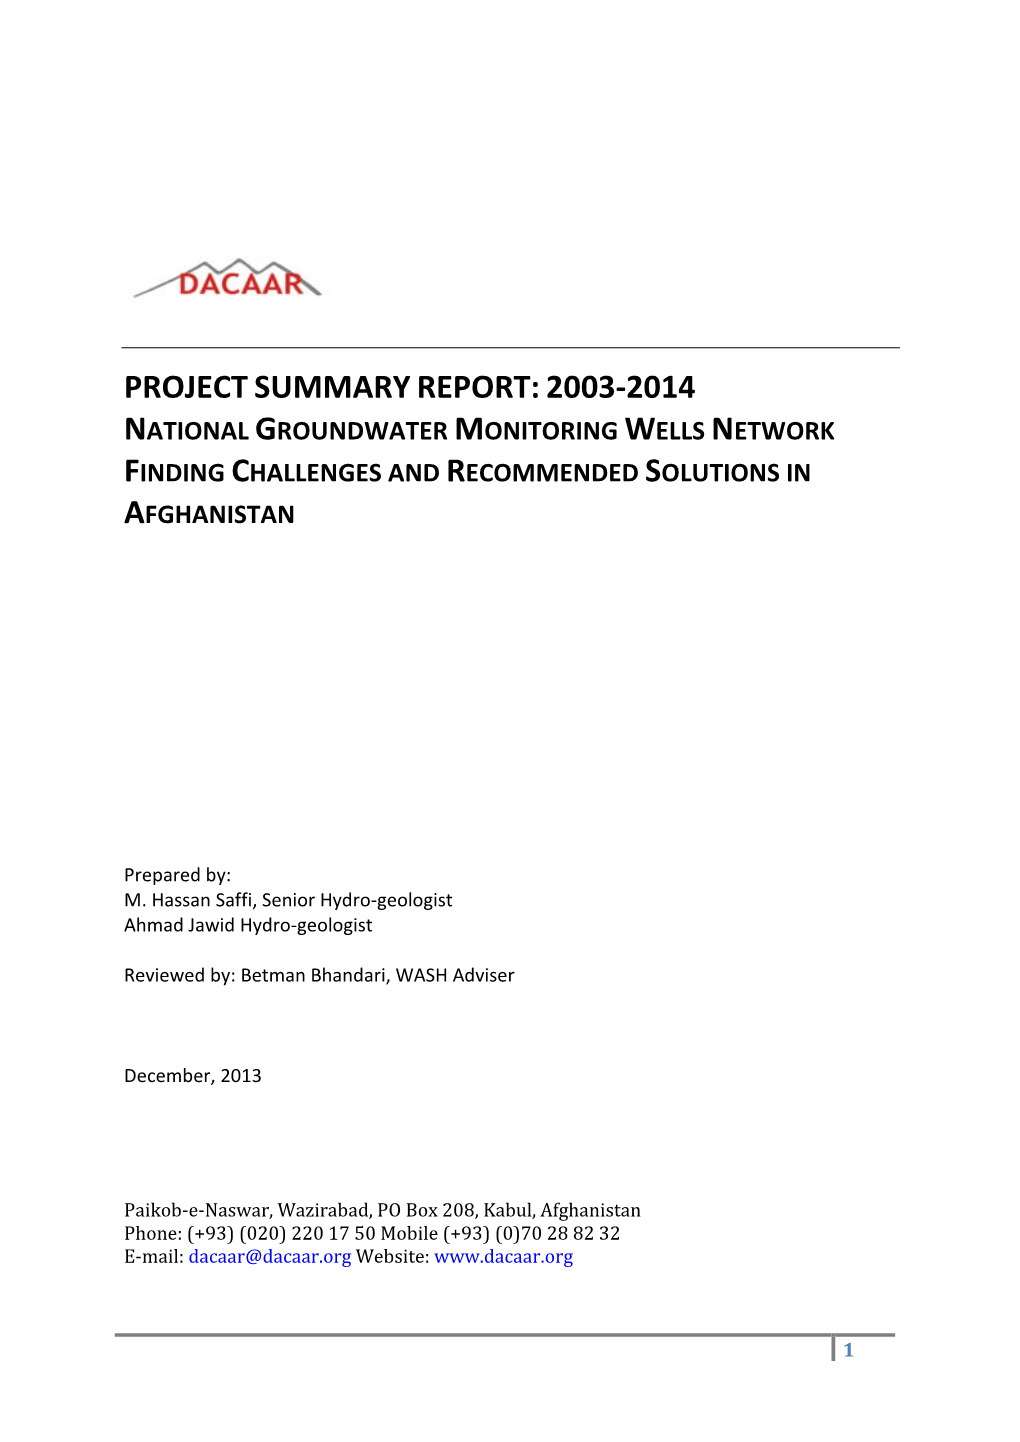 Projectsummaryreport:2003-2014 National Groundwater